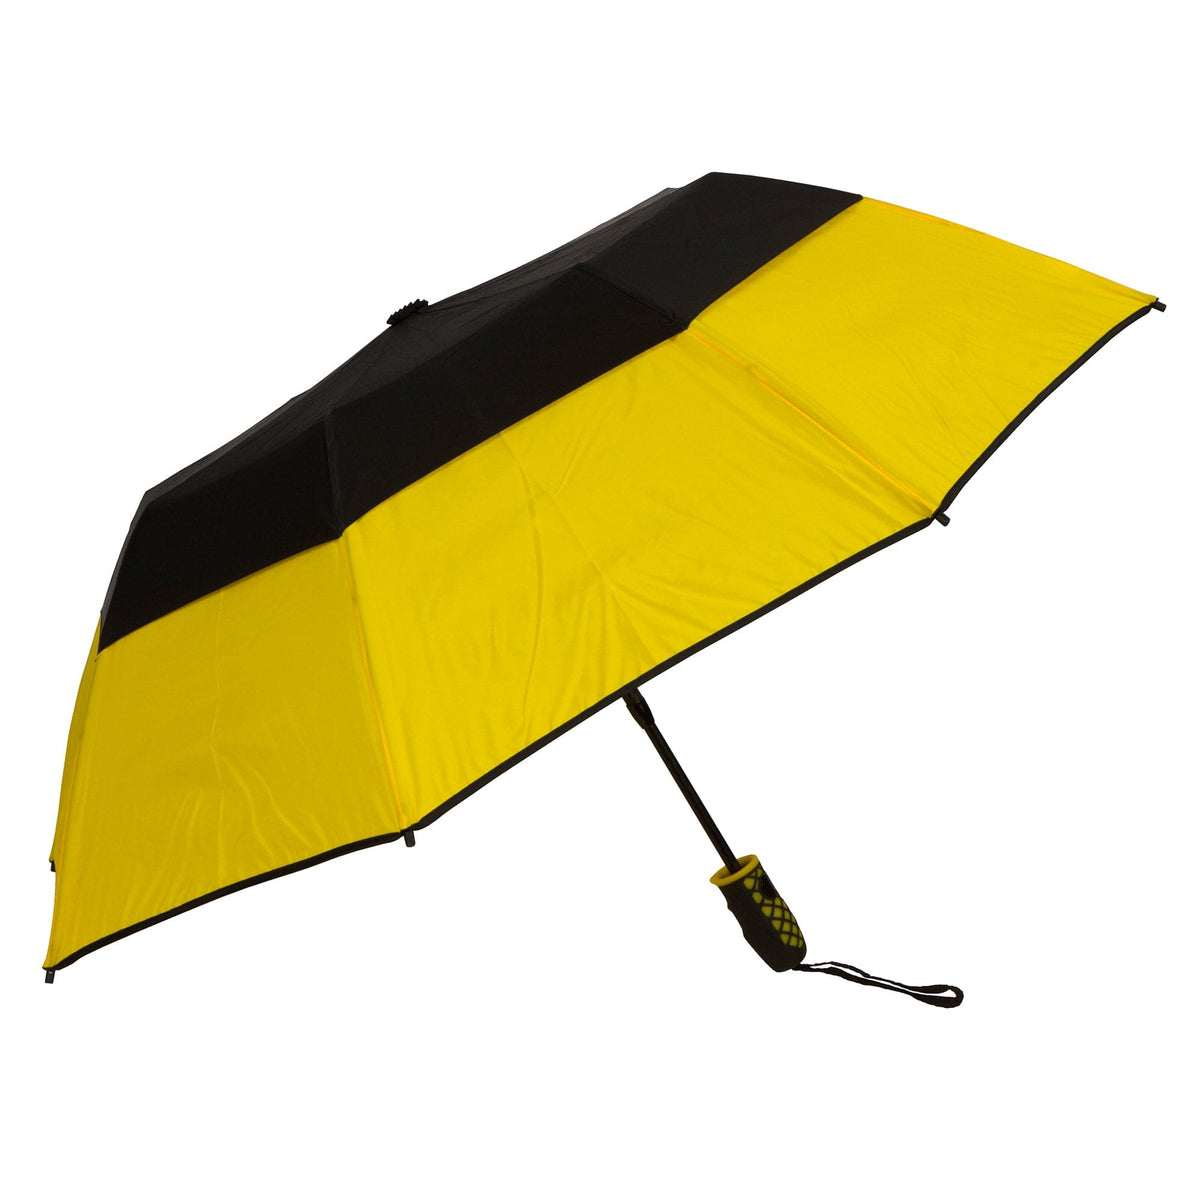 Haas-Jordan Metropolis Umbrella